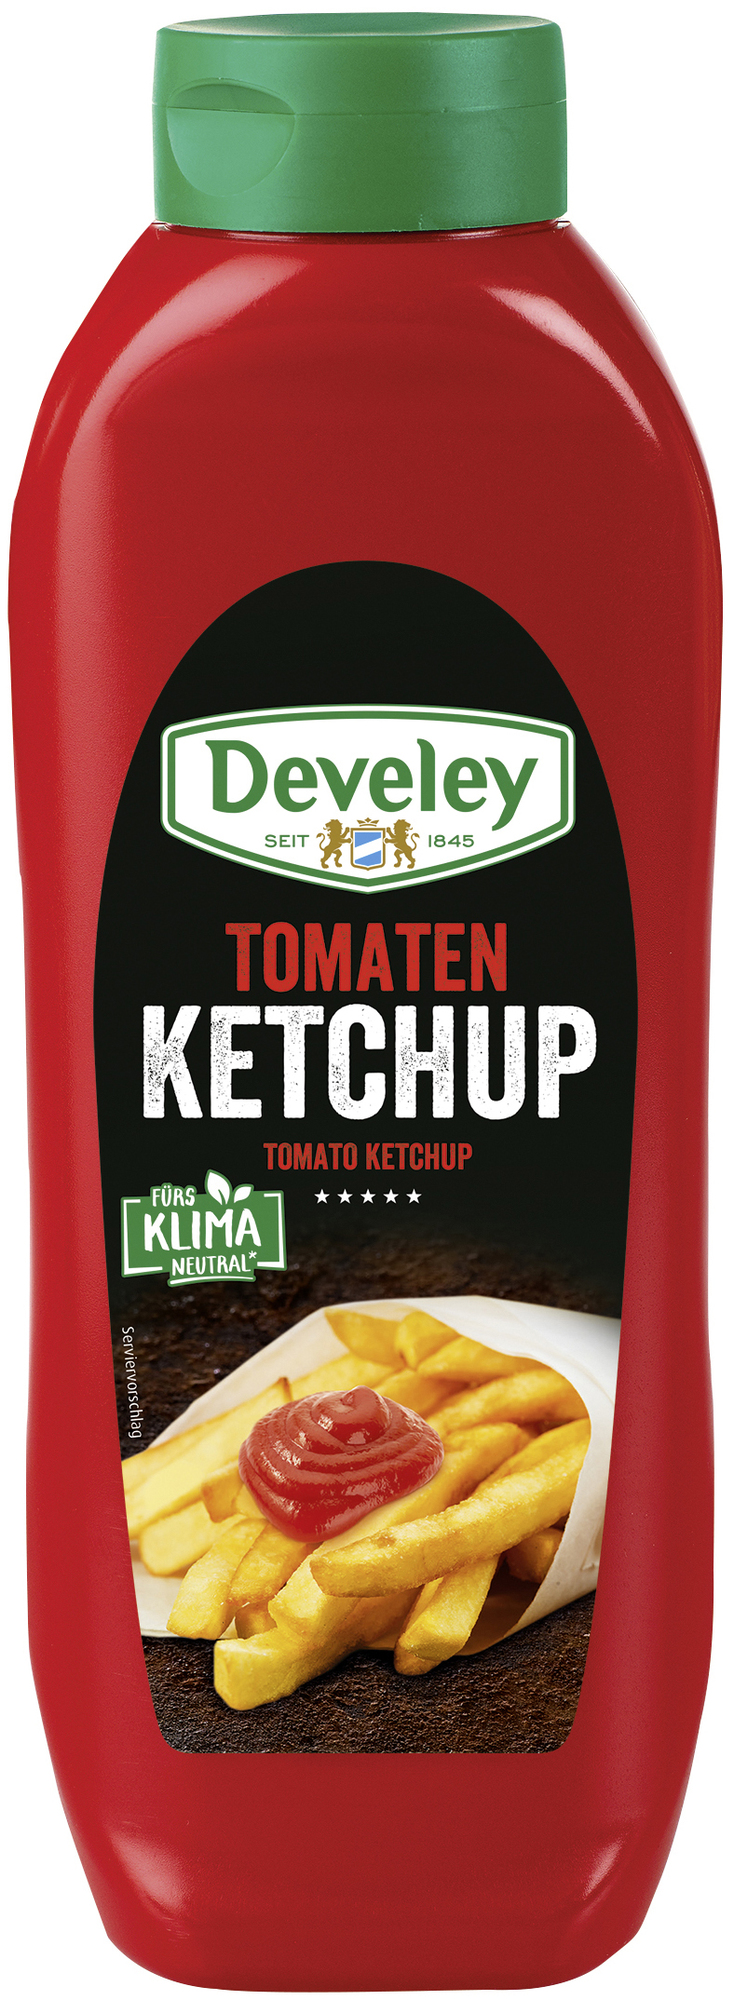 Tomaten Ketchup 875ml